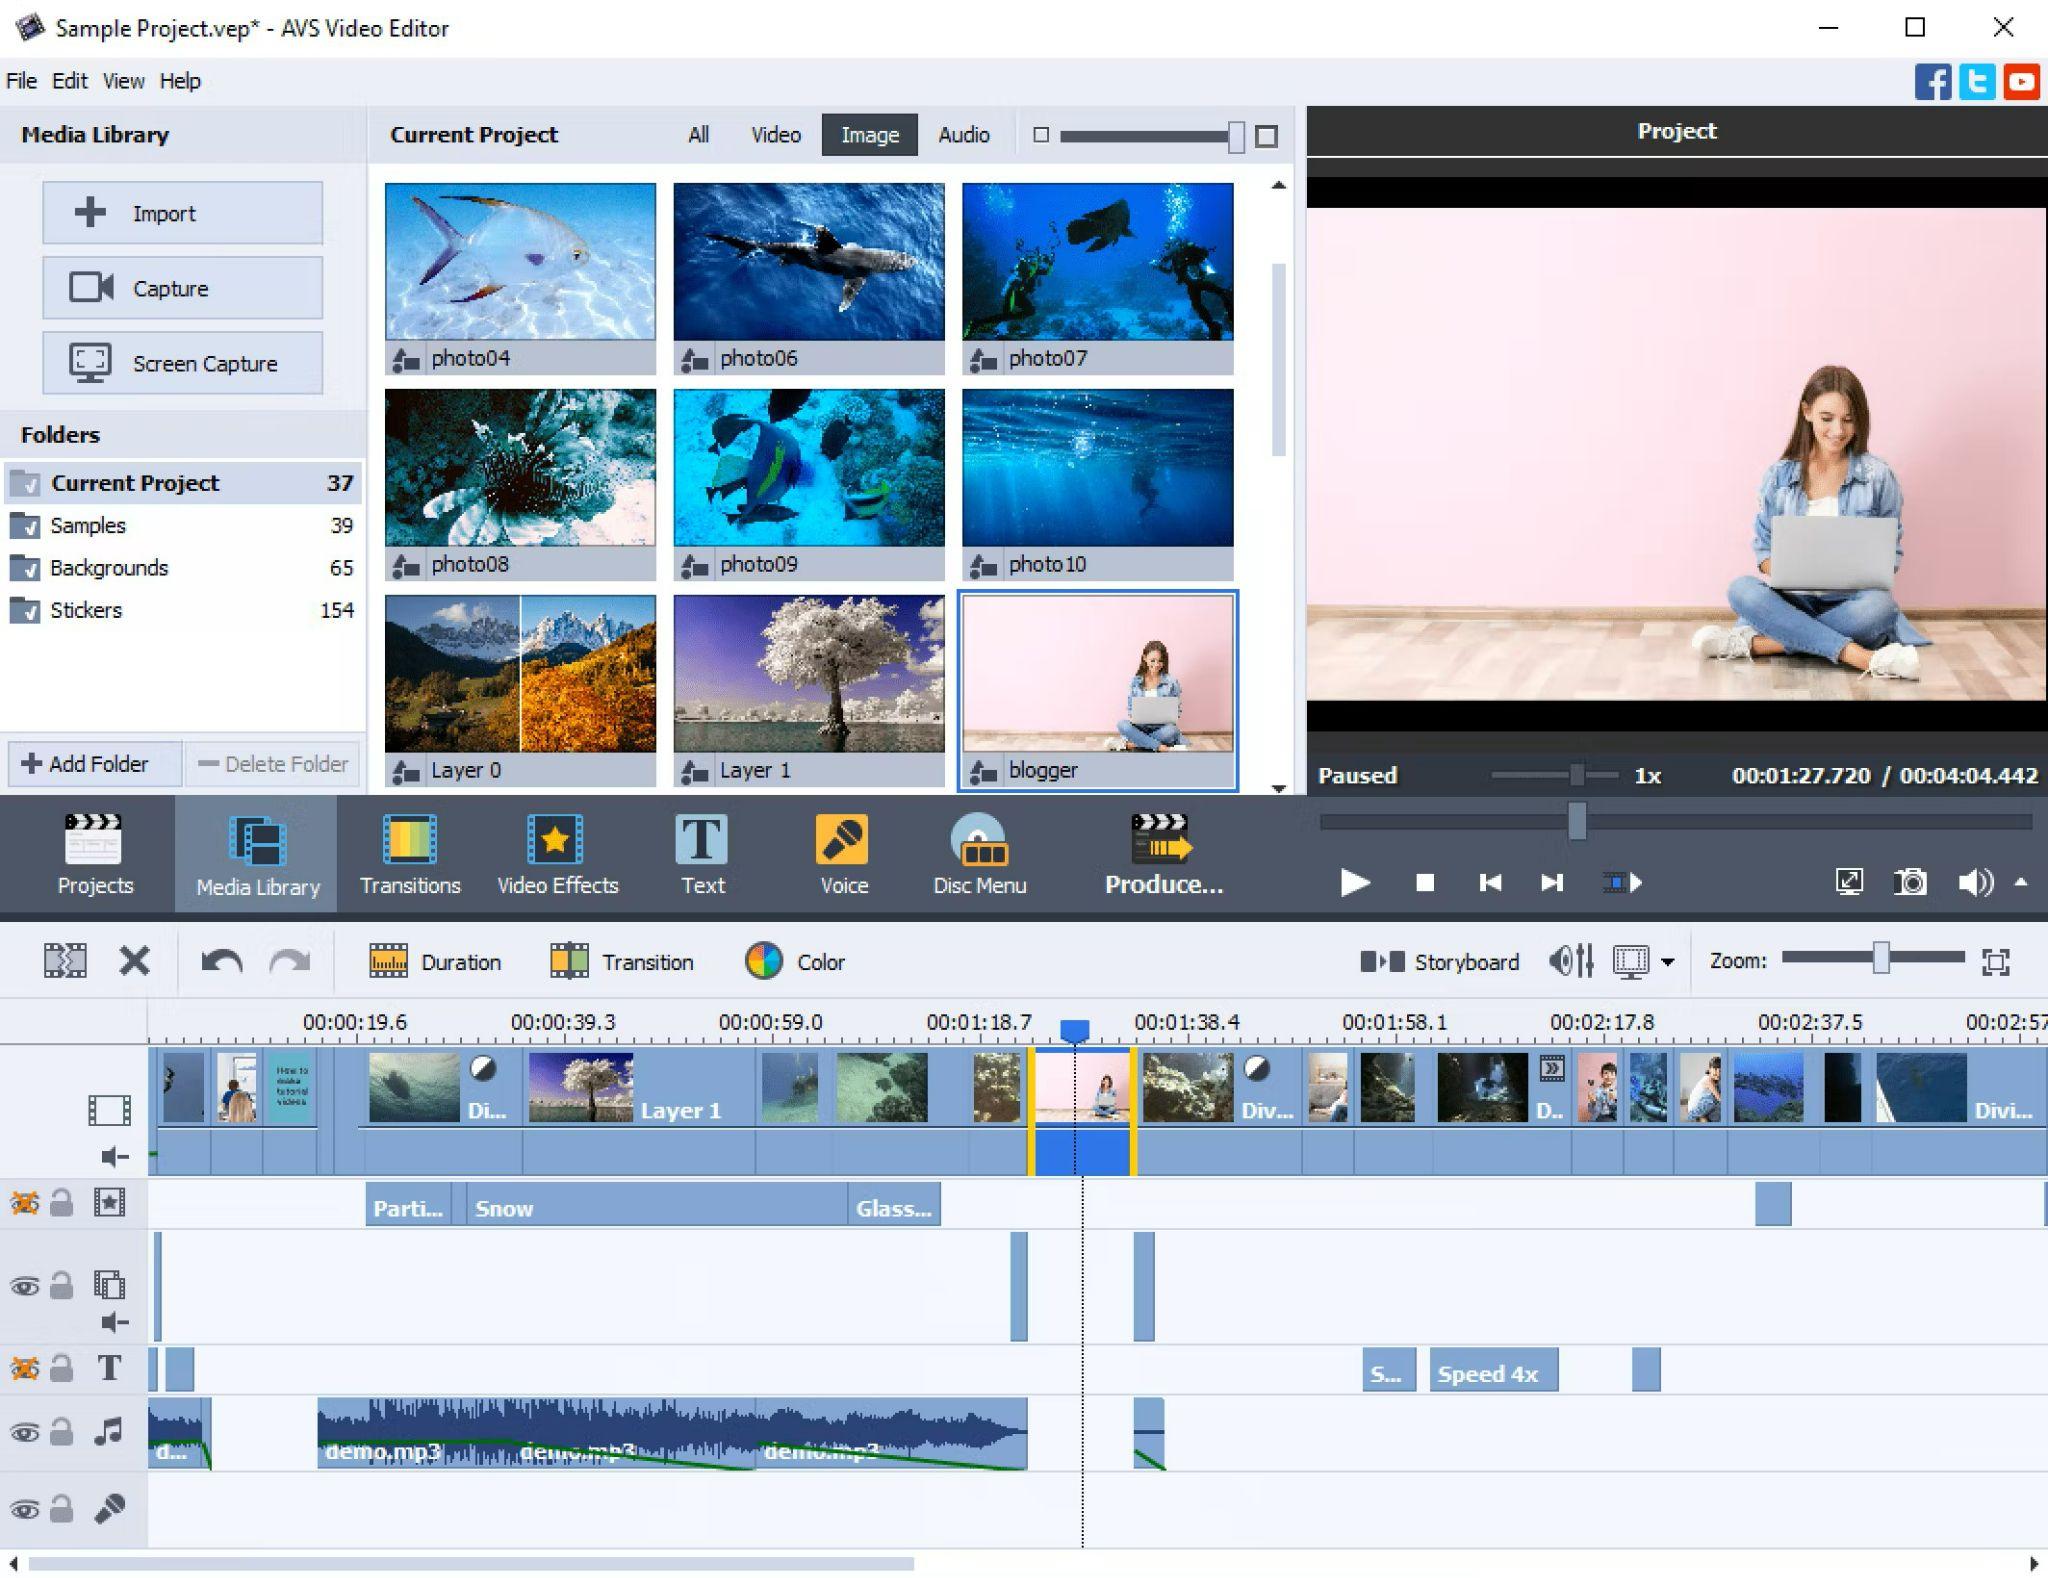 Main window in AVS Video Editor